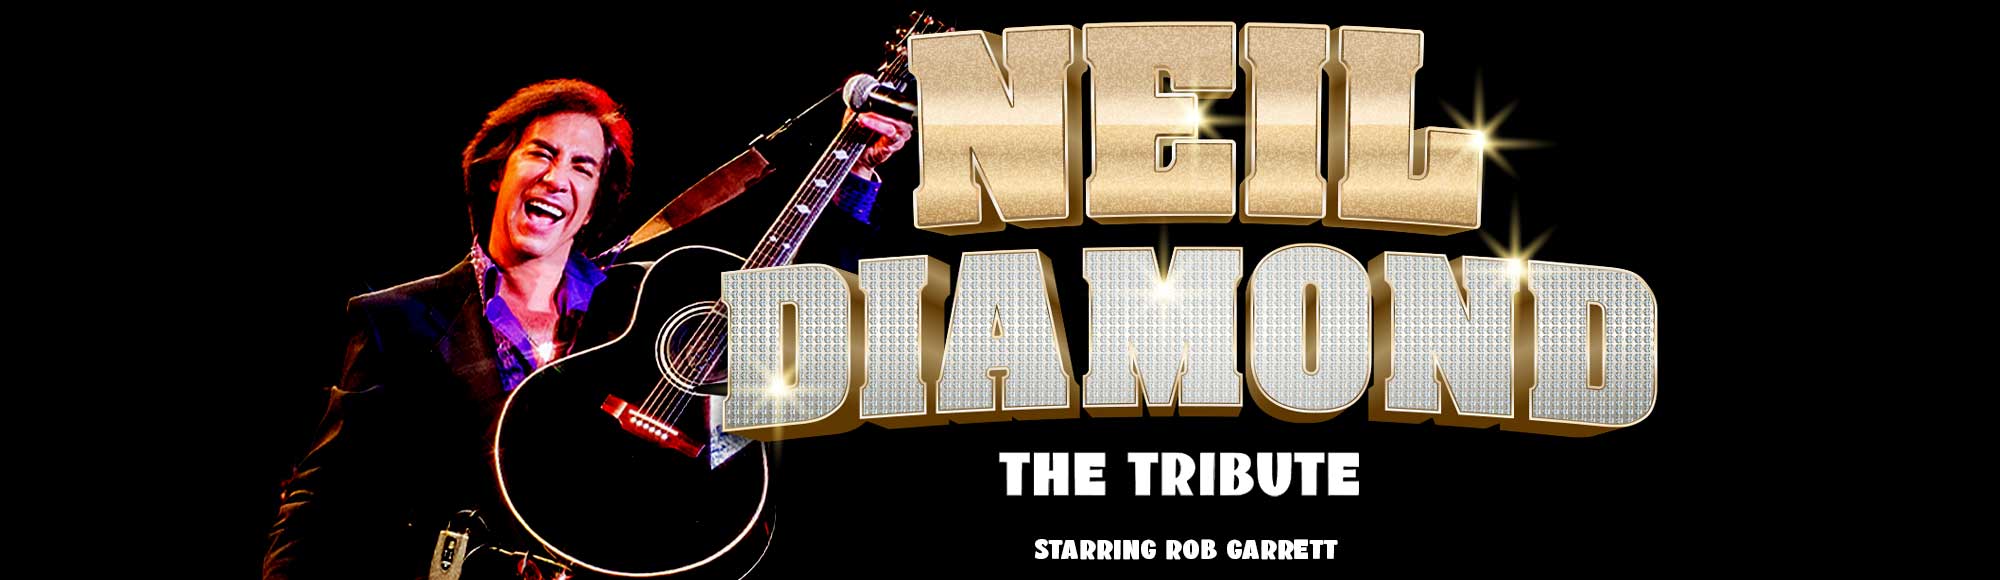 Neil Diamond The Tribute Starring Rob Garrett show